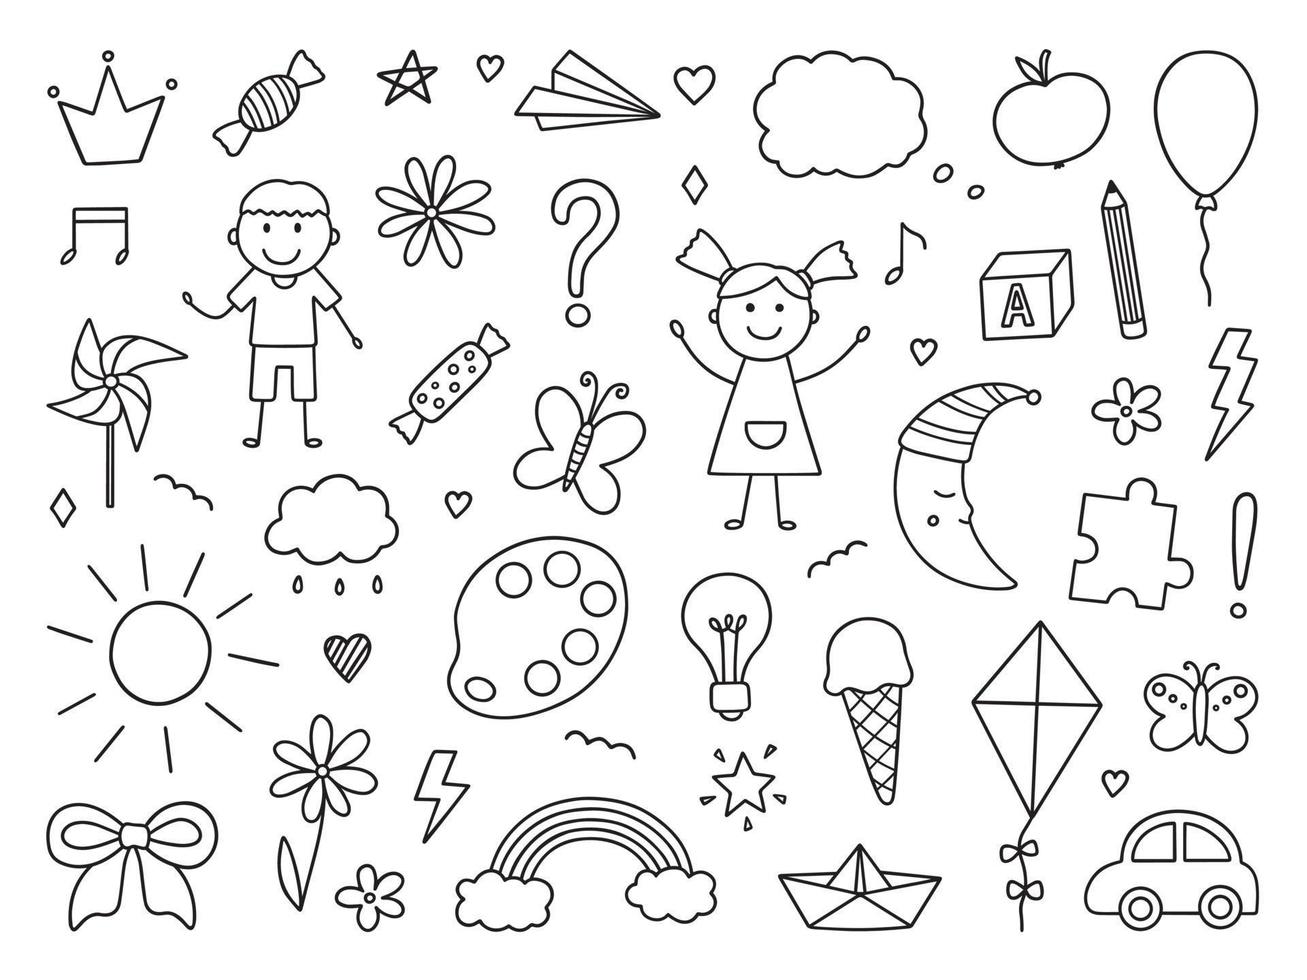 Cute kids doodle set. Children's drawings. Hand drawn vector ...